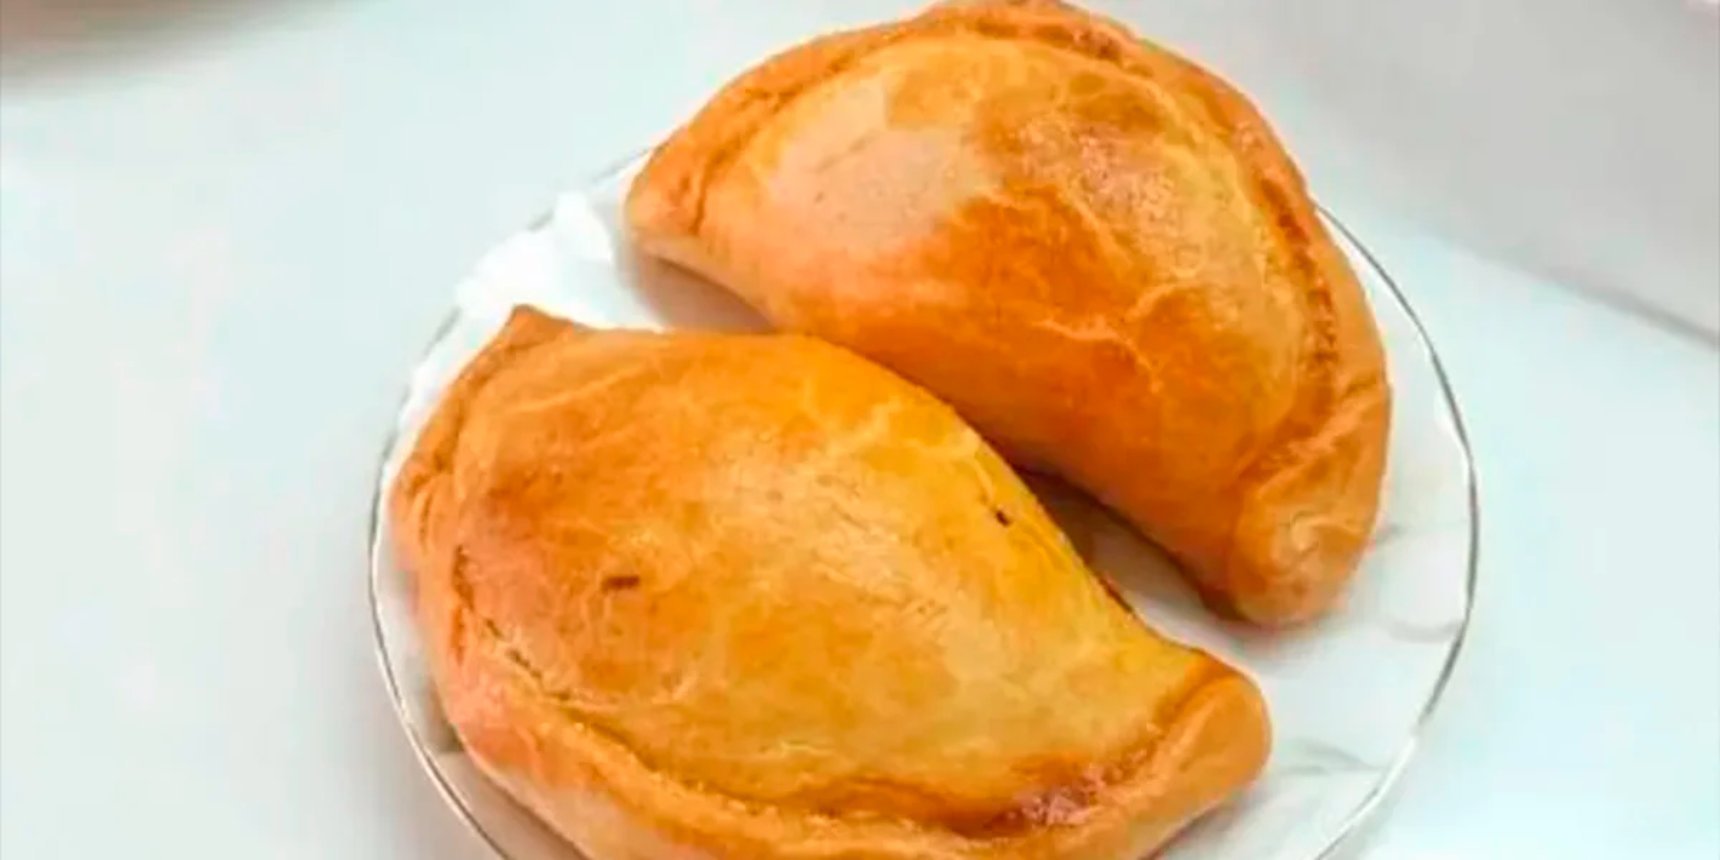 Пирожки караимские рецепт с мясом фото пошагово